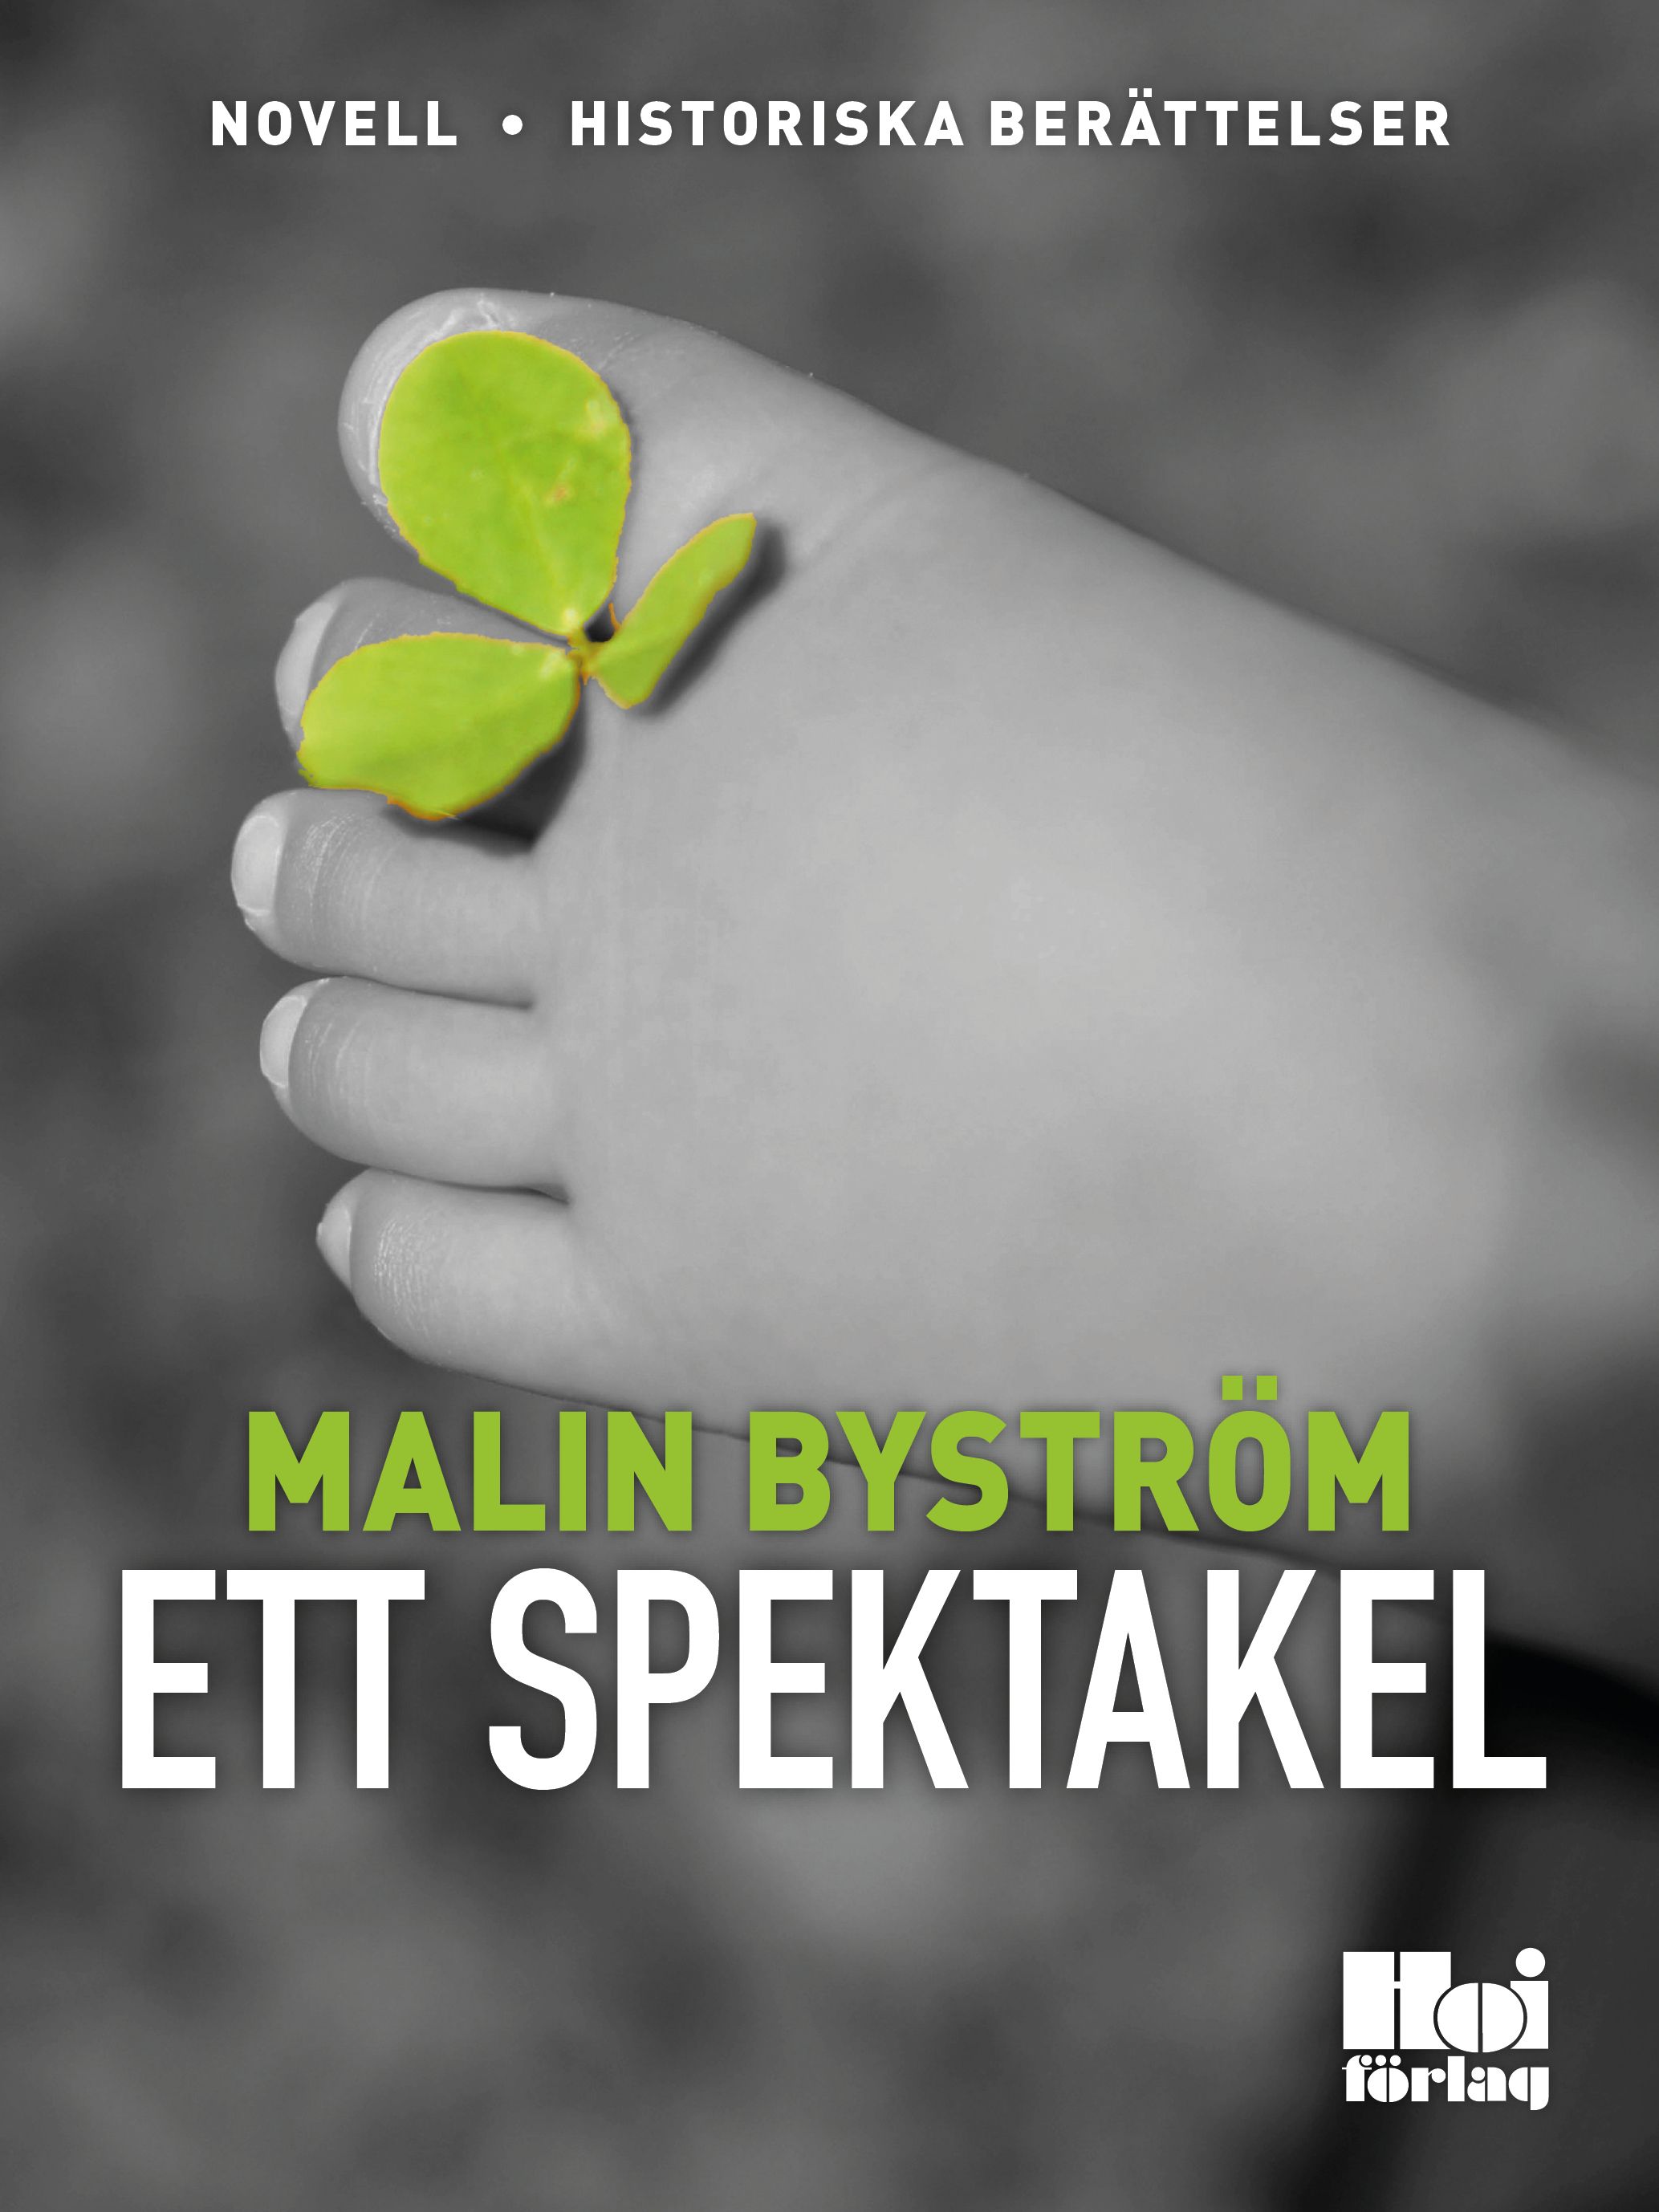 Ett spektakel, e-bog af Malin Byström